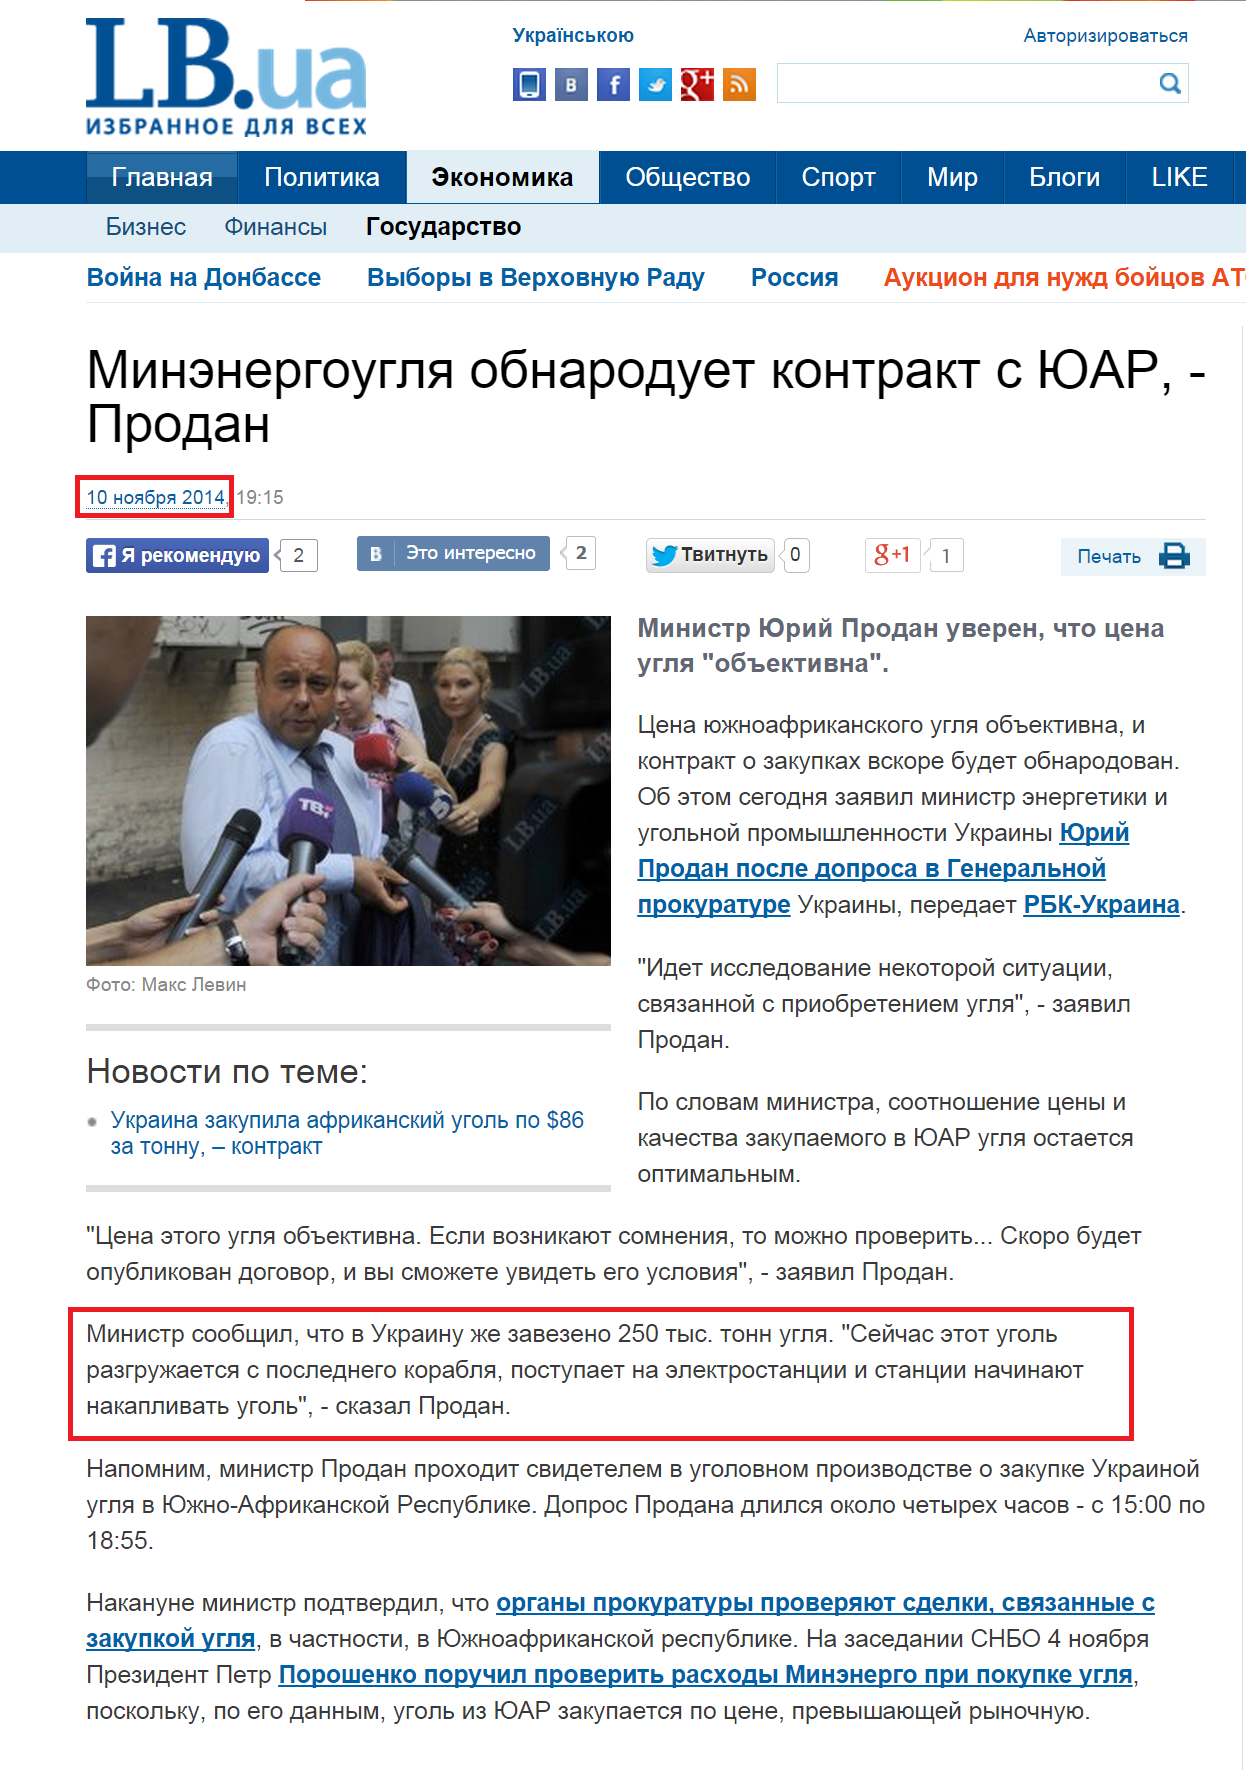 http://economics.lb.ua/state/2014/11/10/285567_minenergouglya_obnaroduet_kontrakt.html